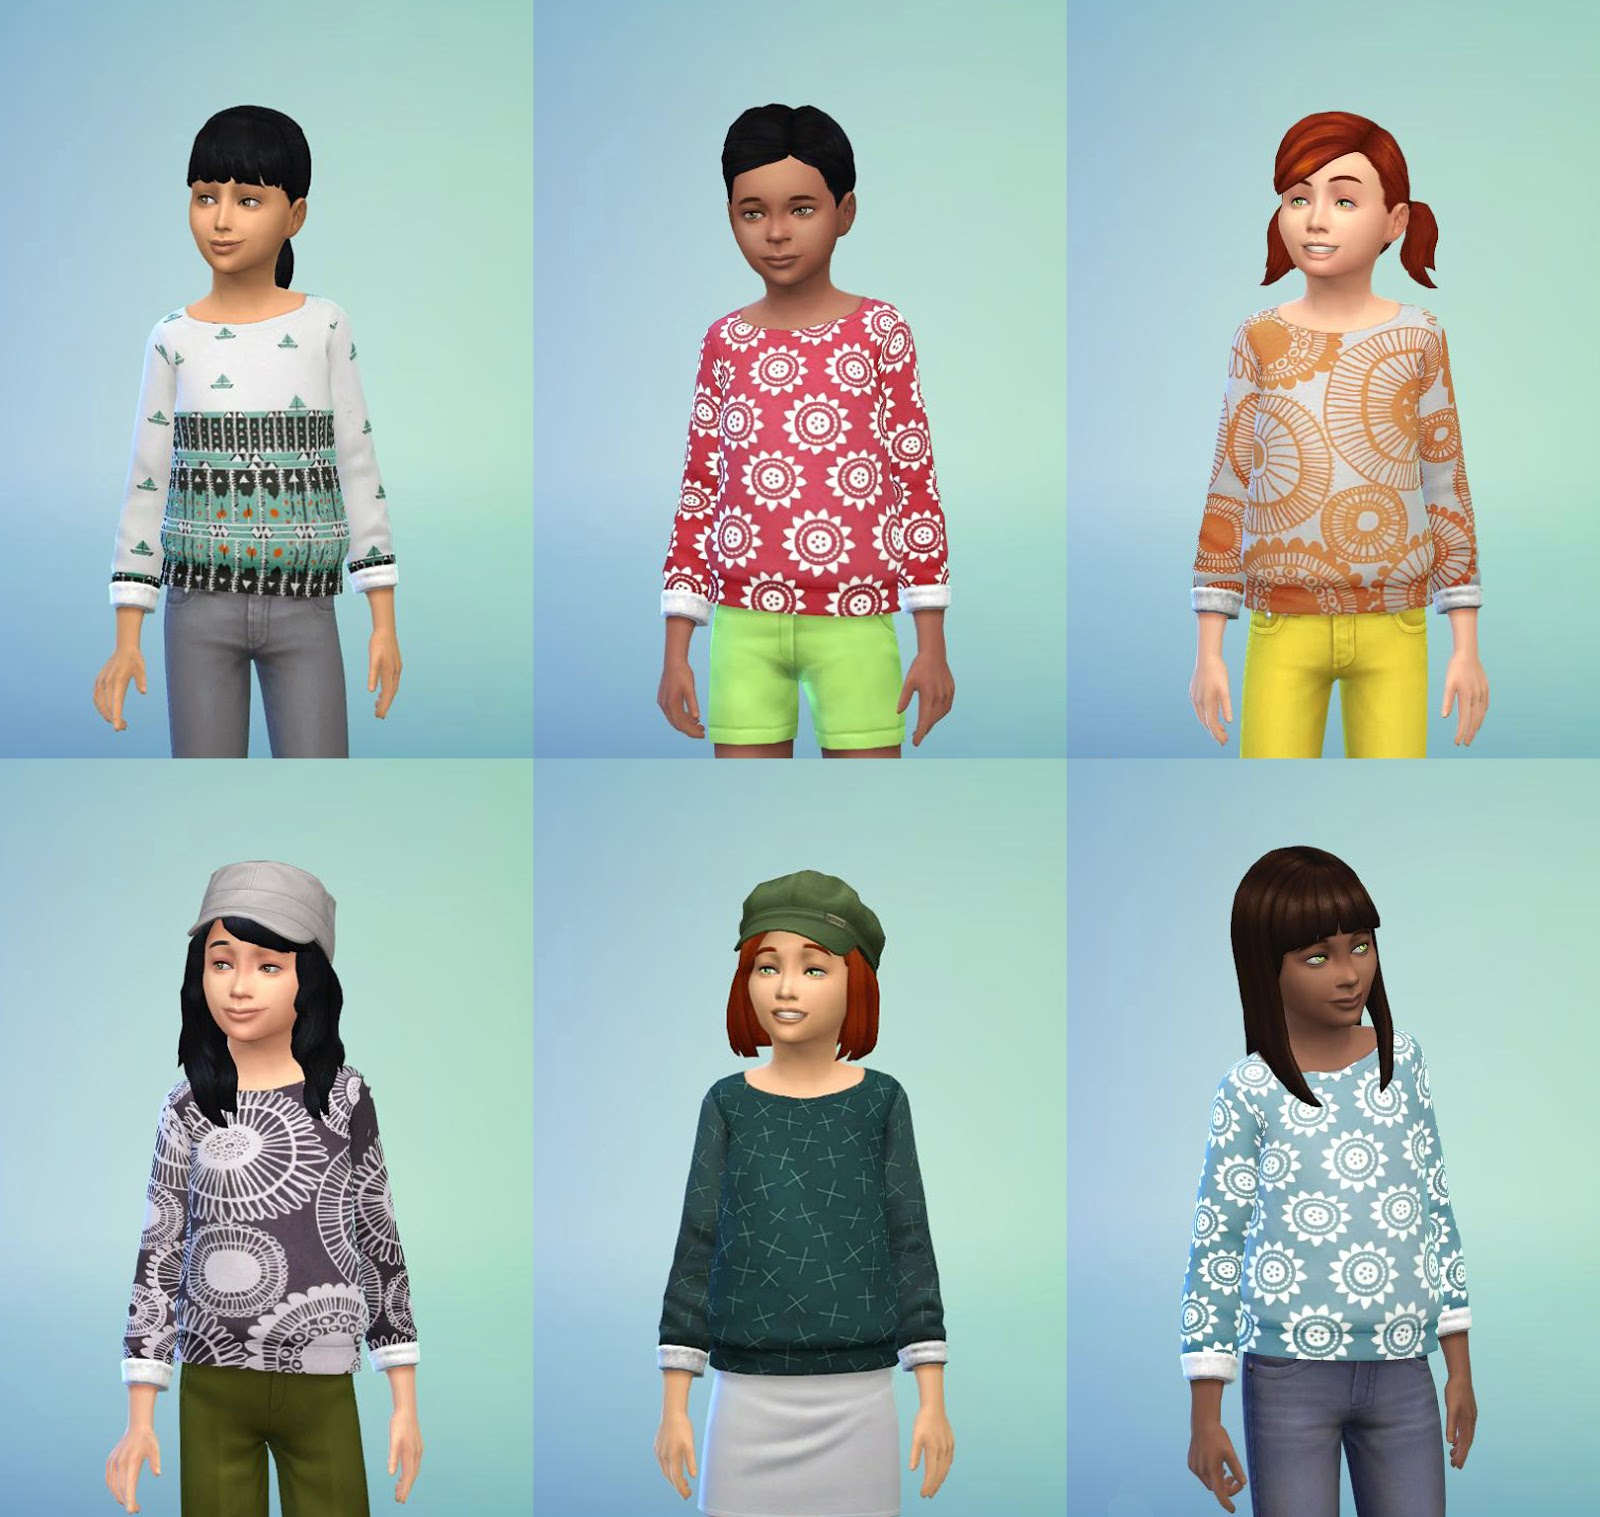 Sims 4 mods sim child. SIM children симс 4. SIMS 4 Mod child. Симс 4 малыши. Симс 4 моды child clothes.